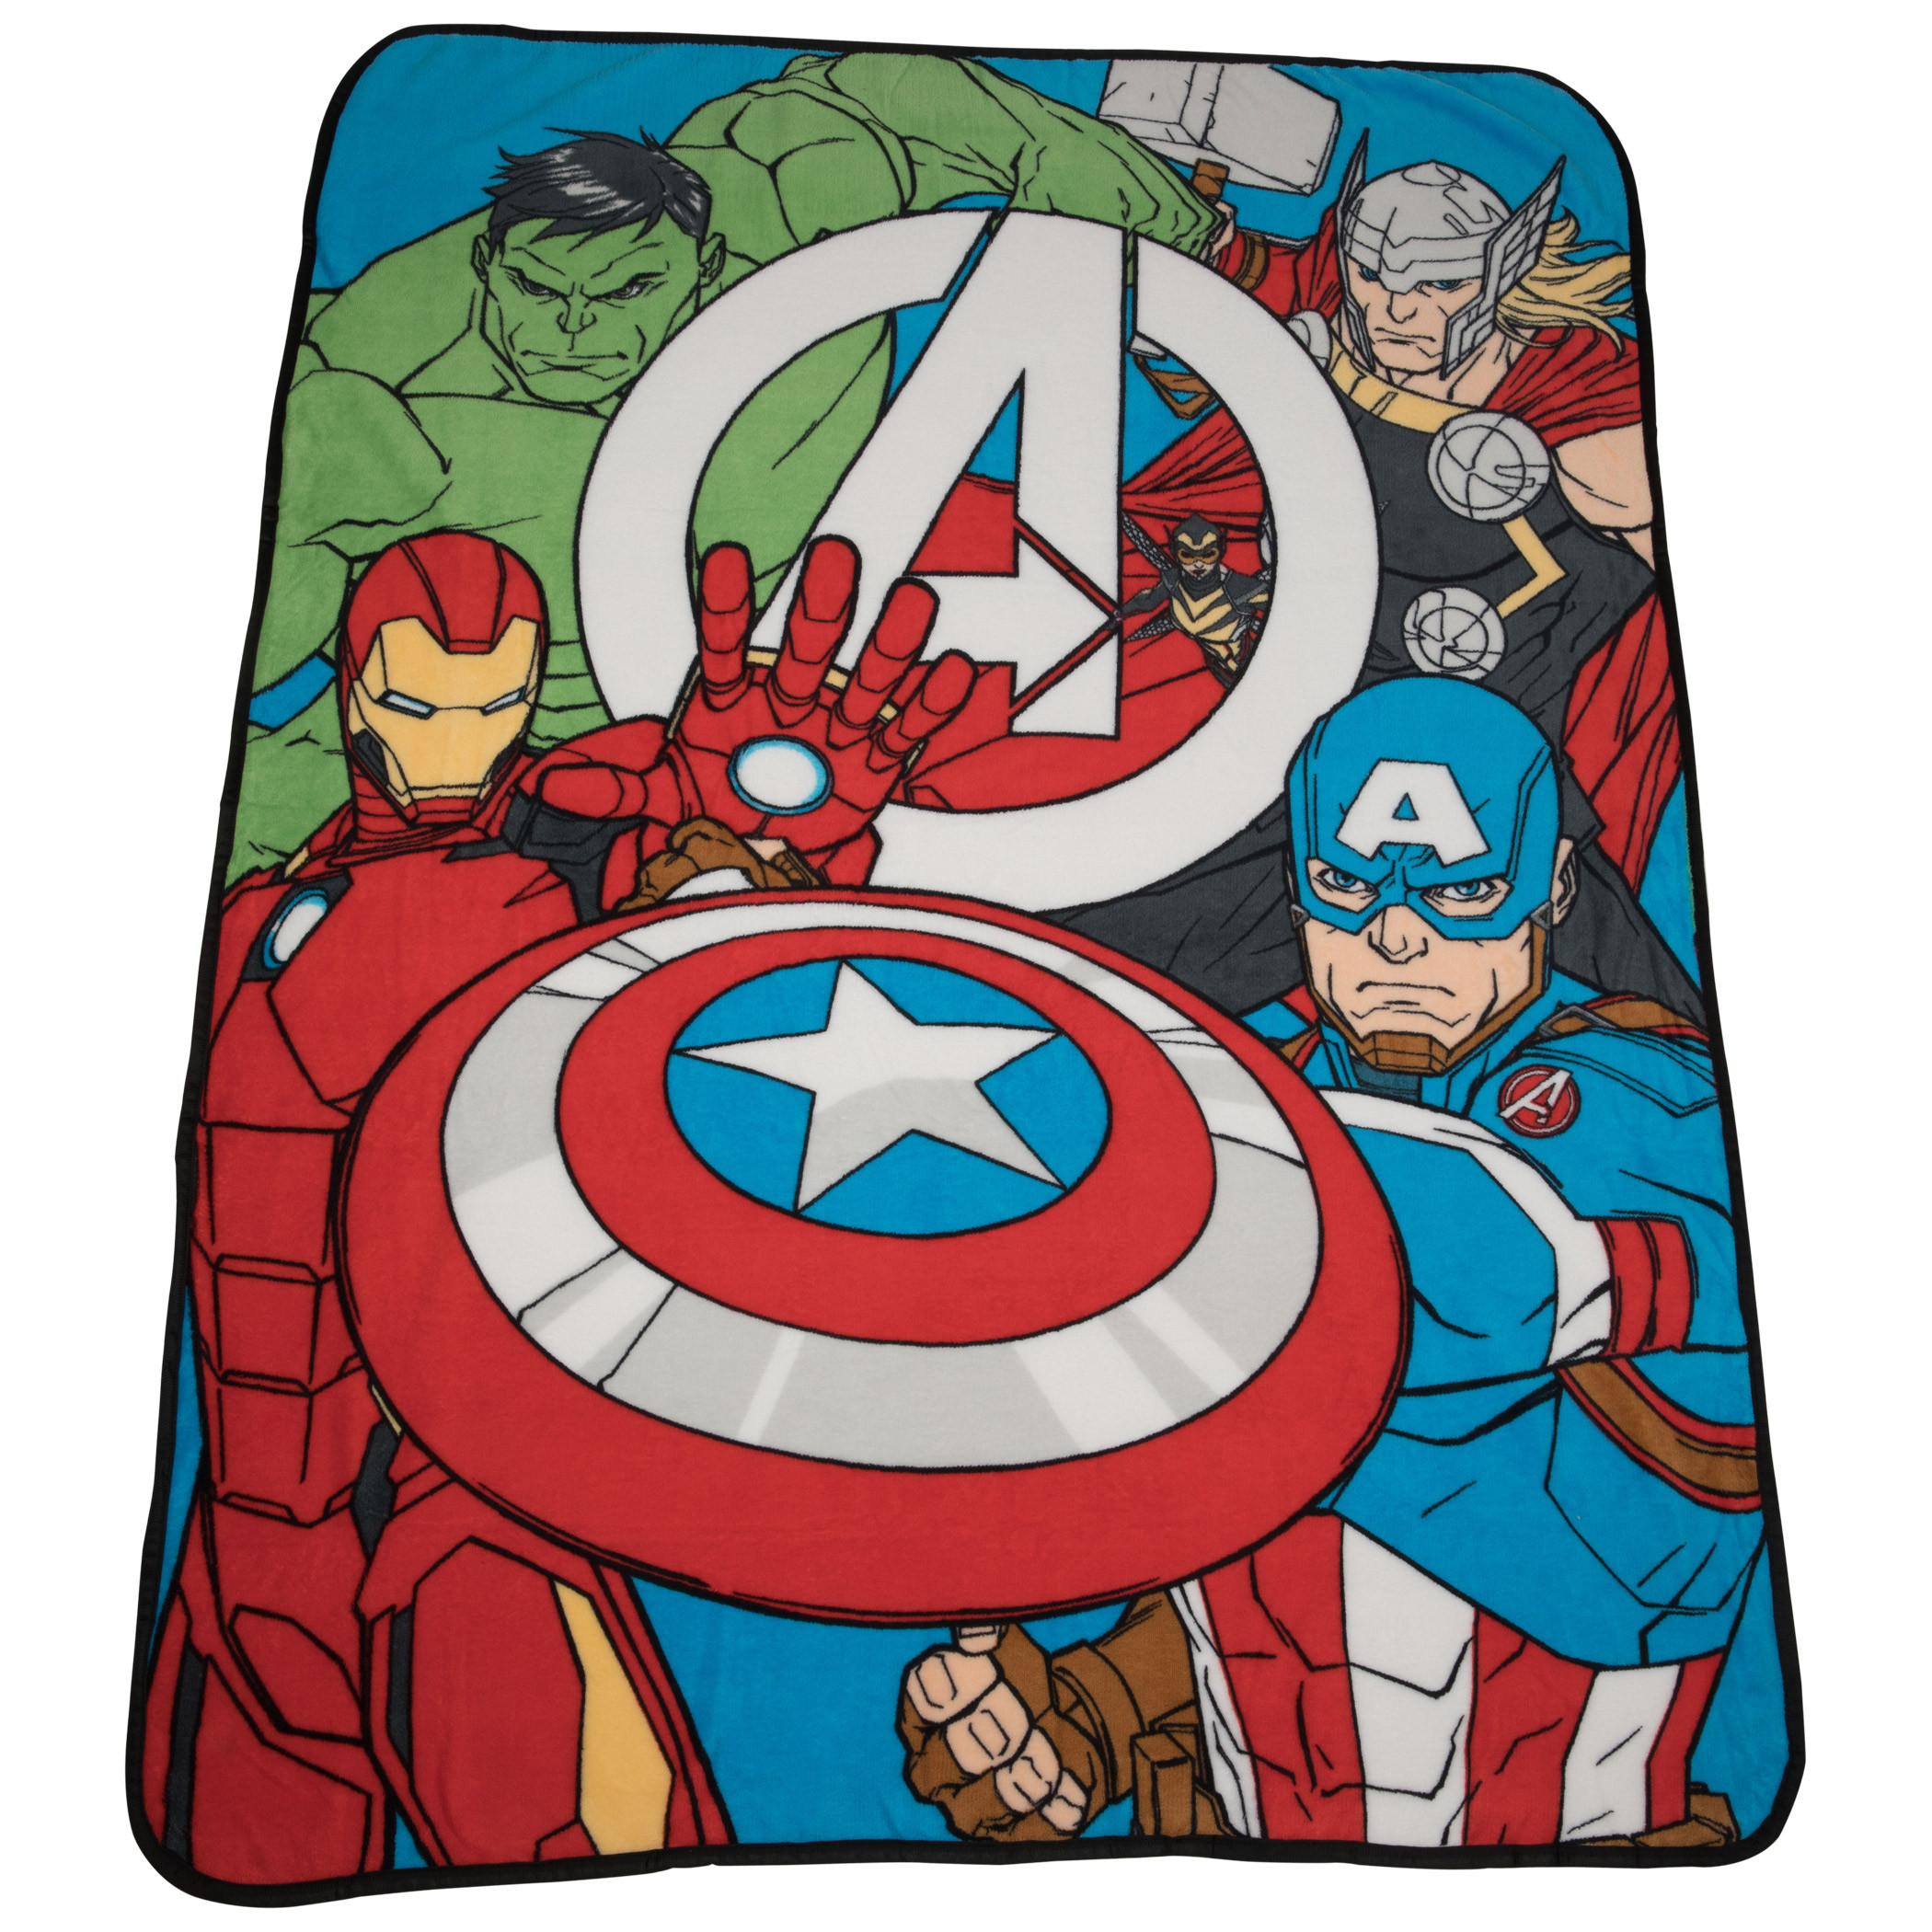 Avengers Hero Collage Throw Blanket